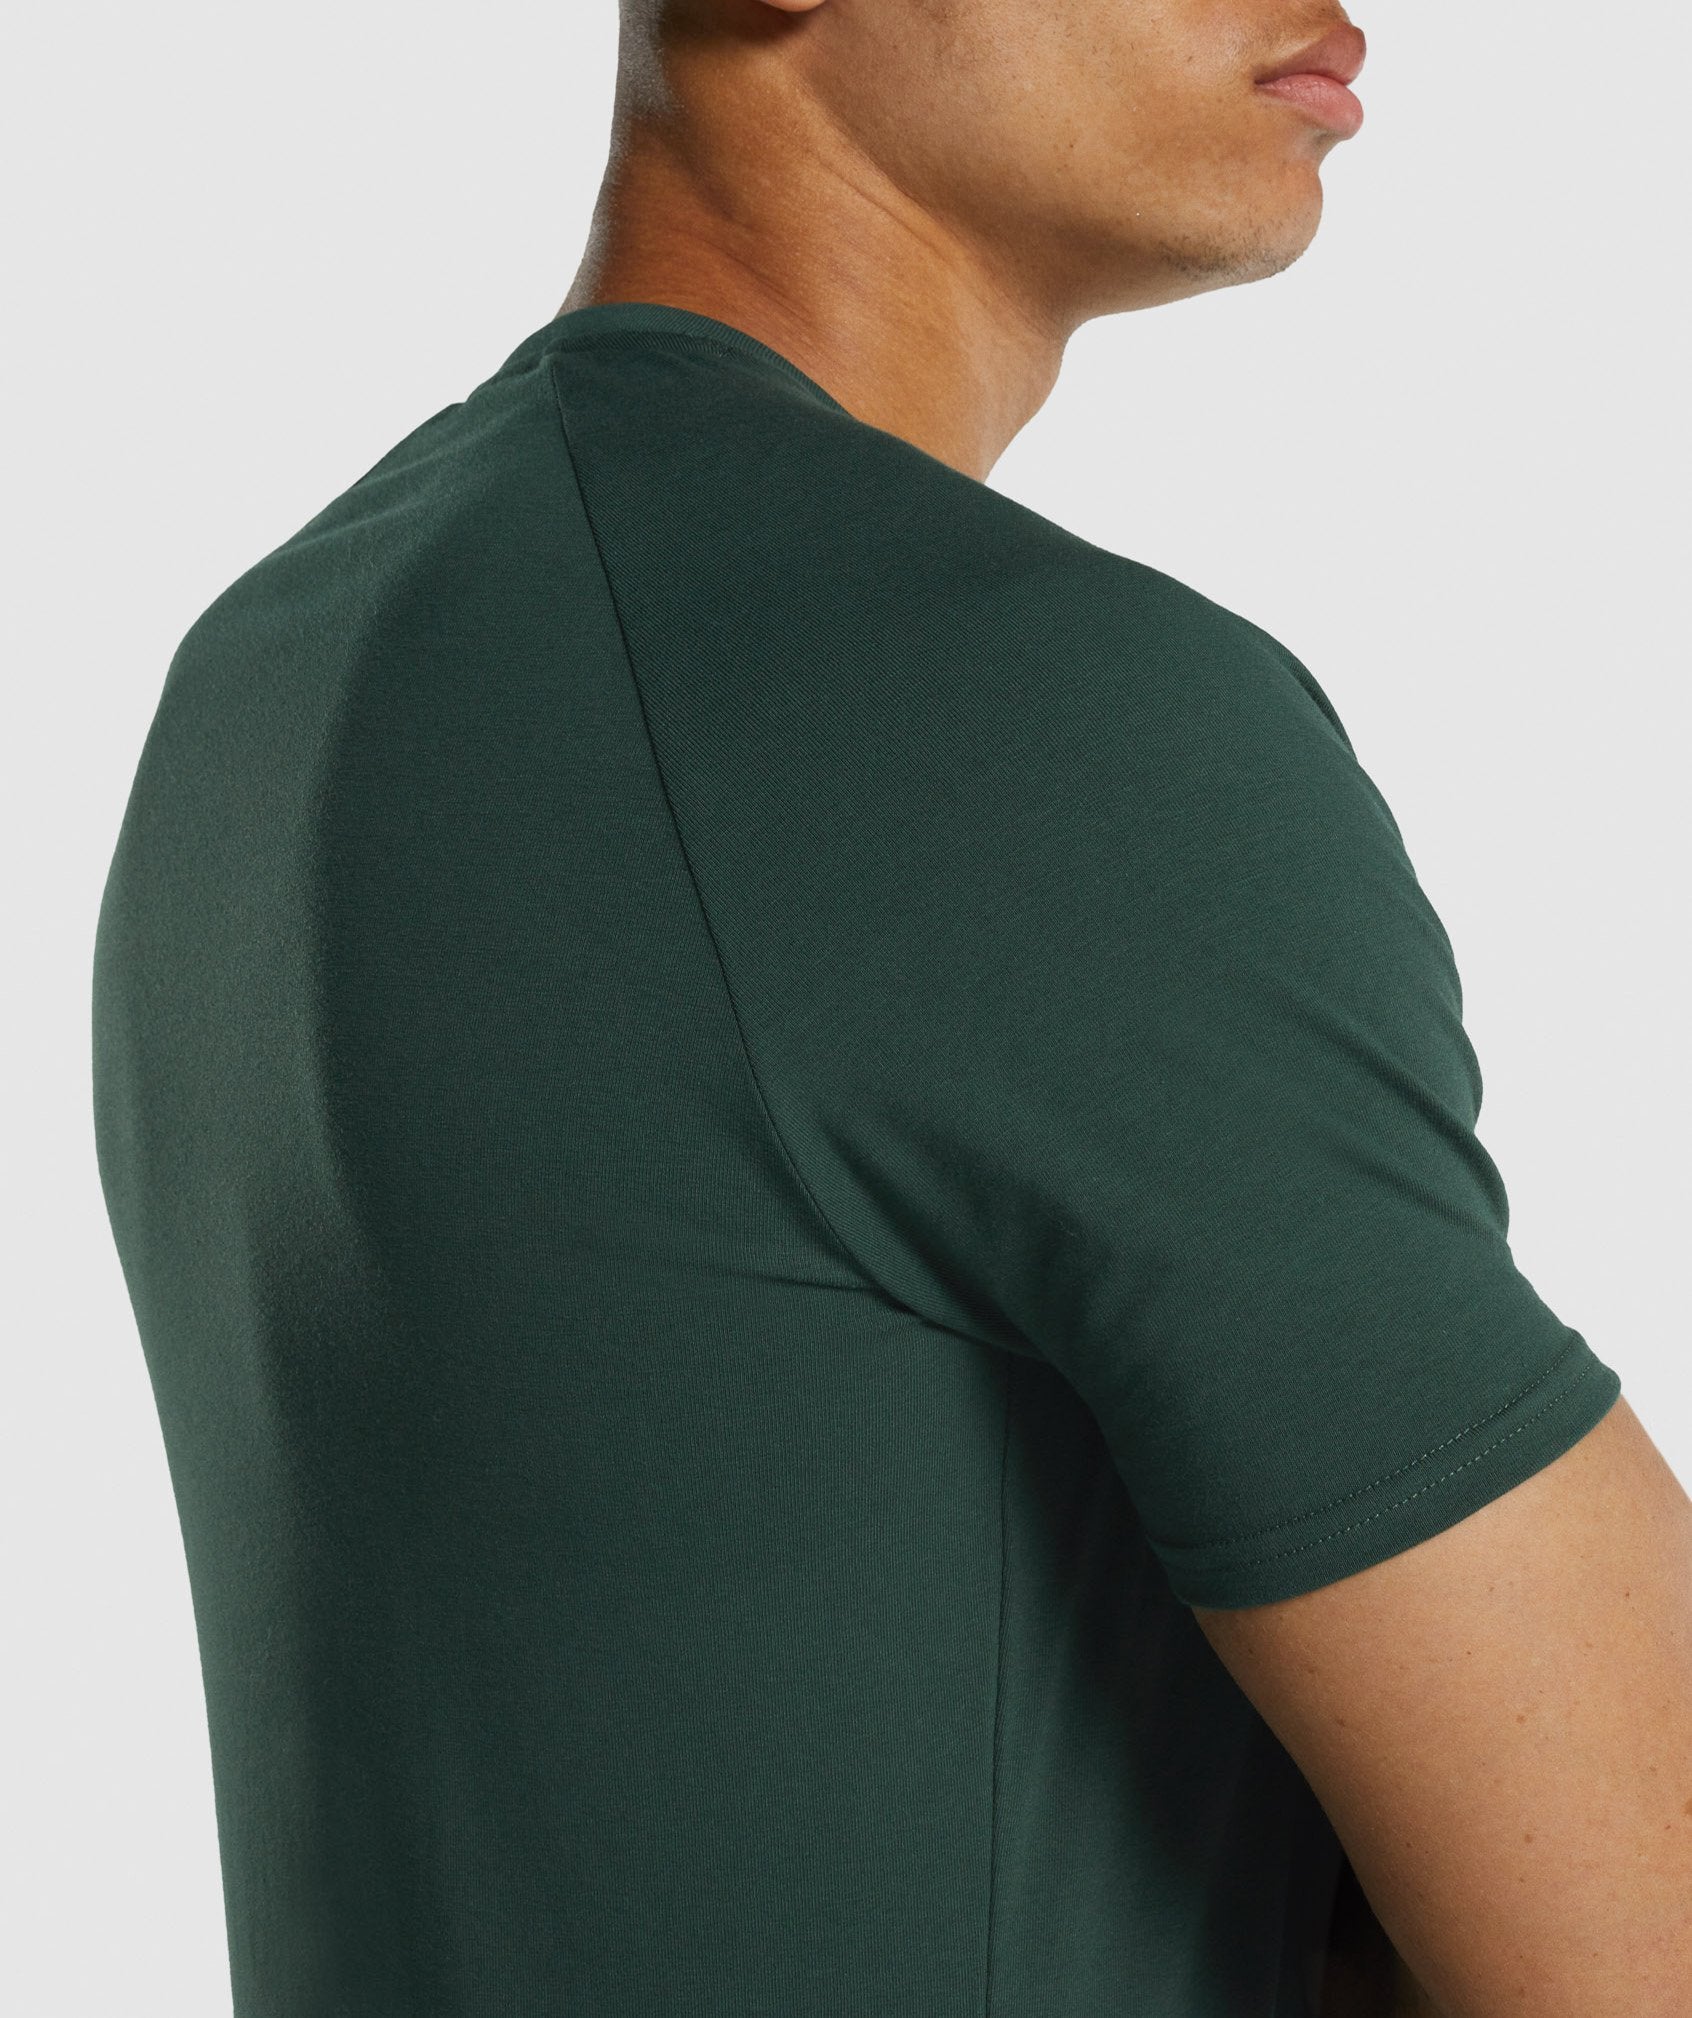 Apollo T-Shirt in Dark Green